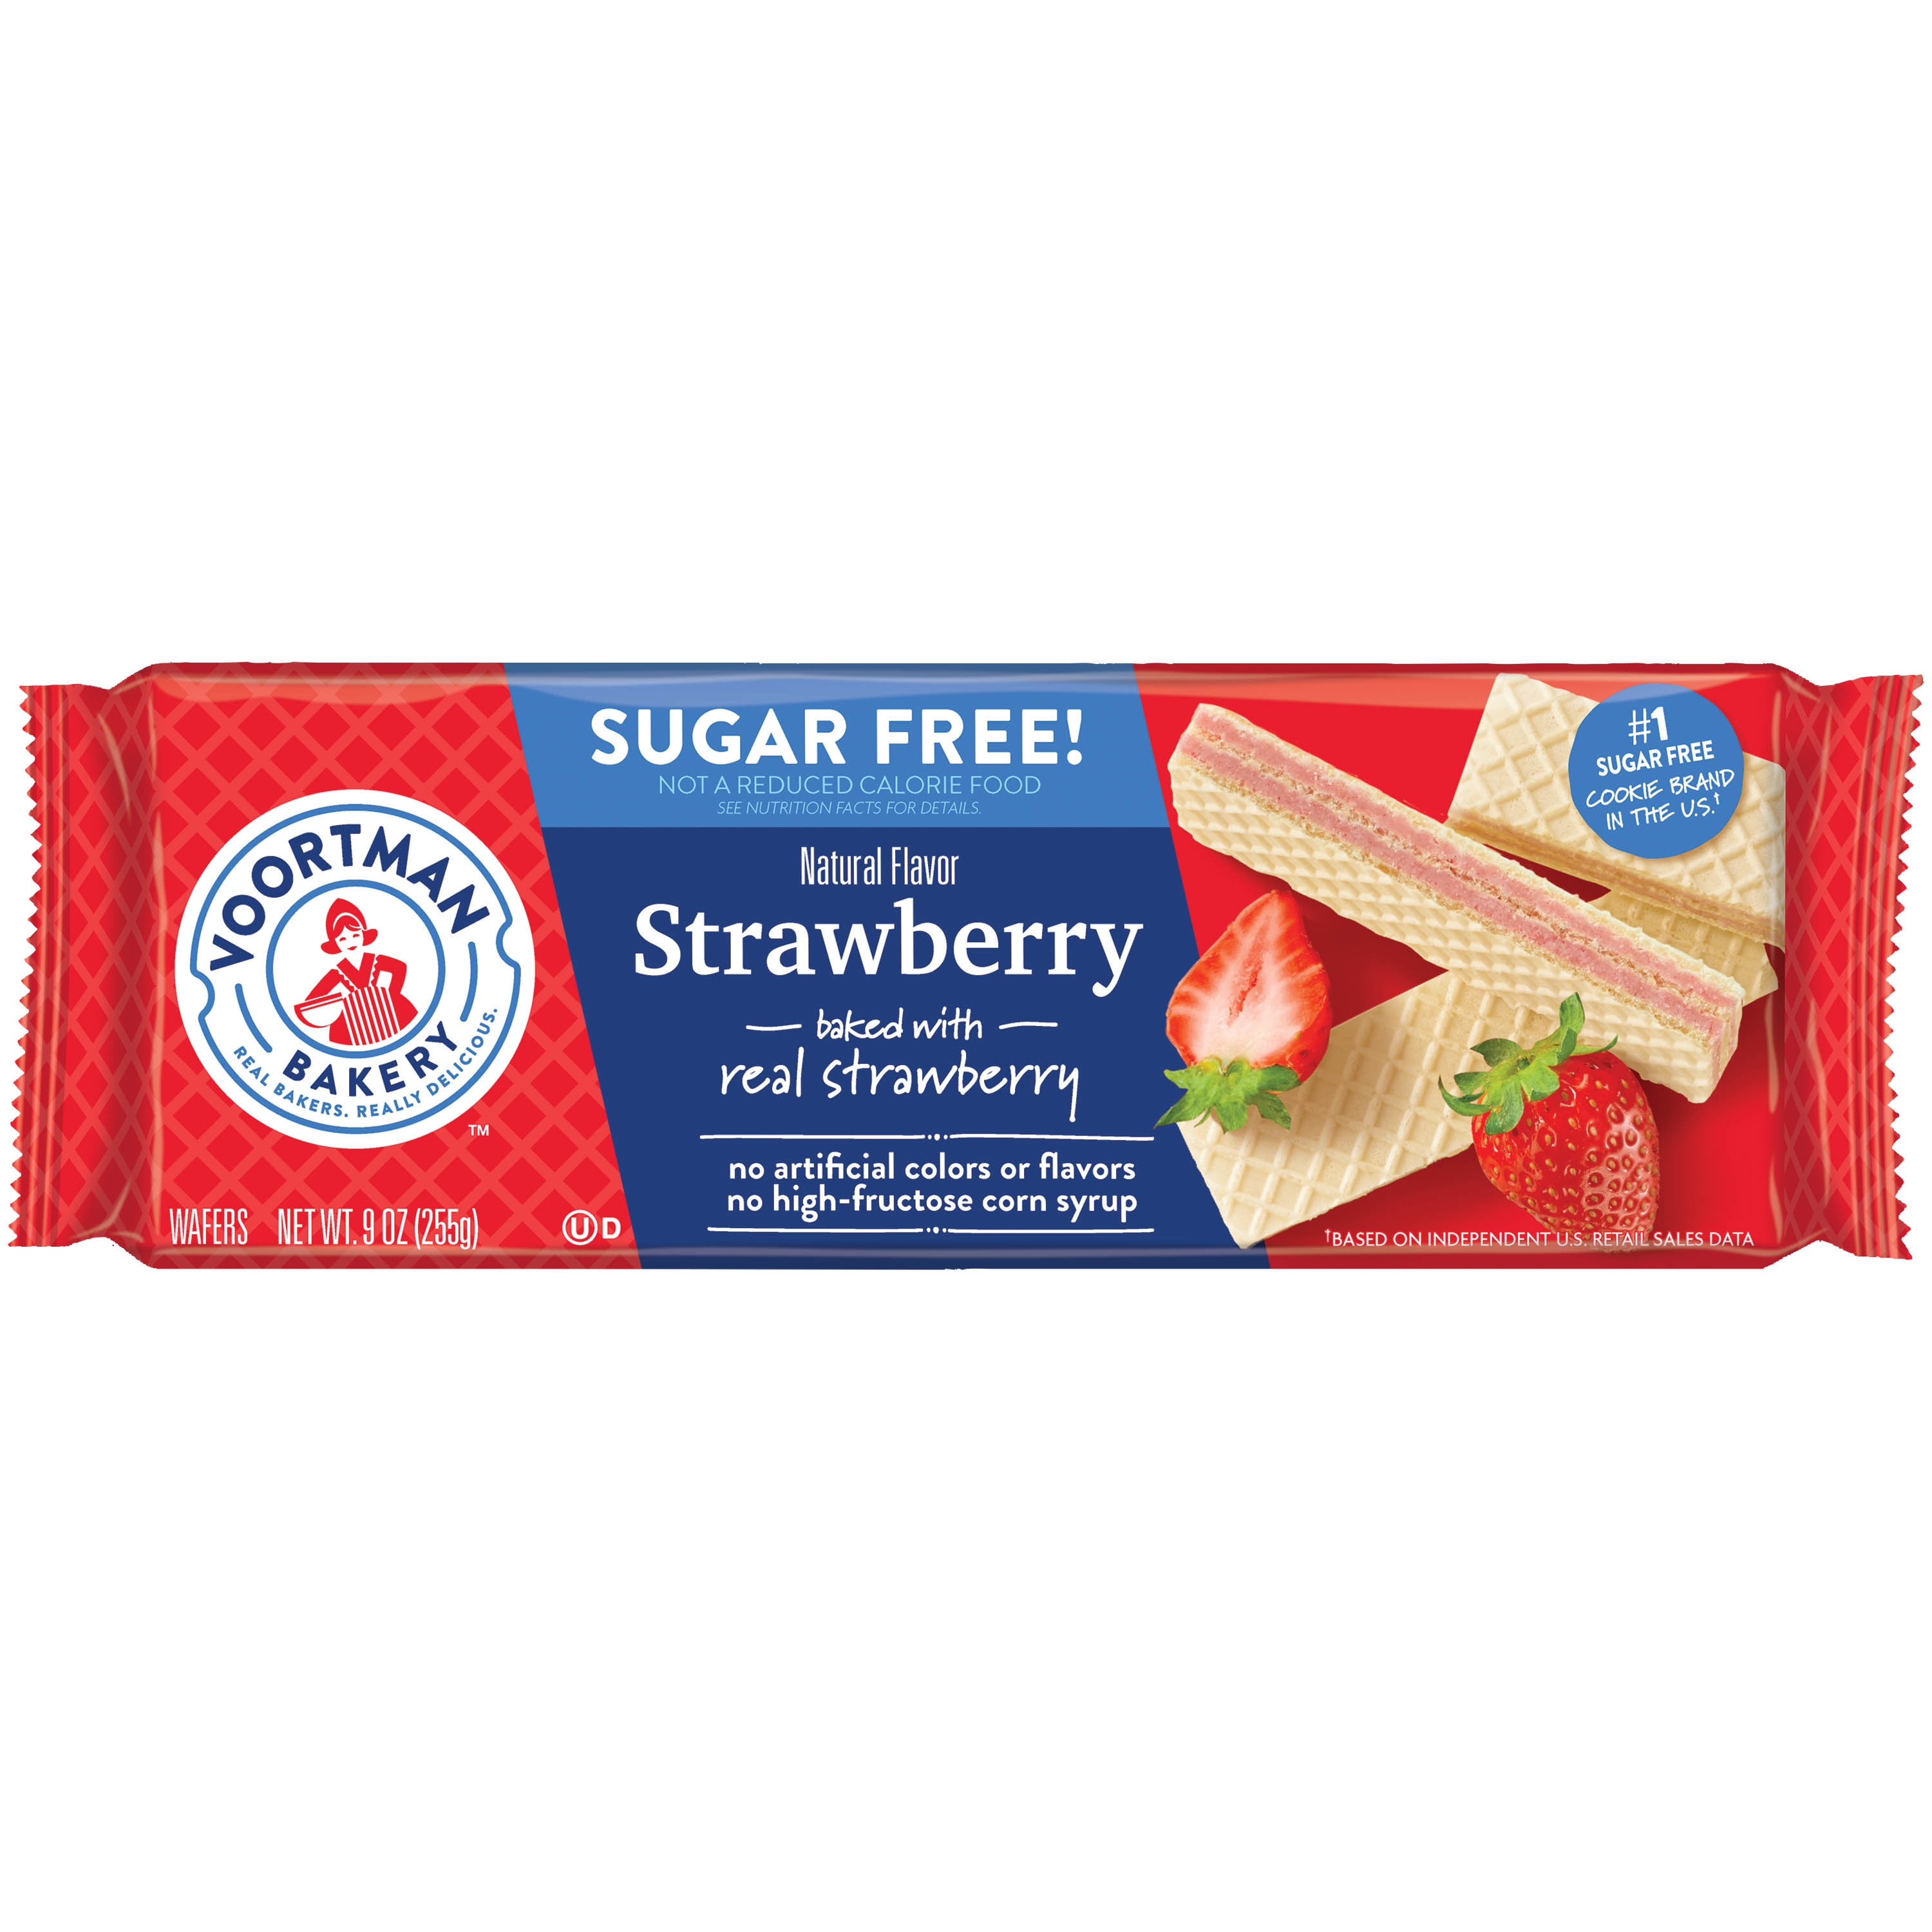 VOORTMAN Bakery Sugar Free Strawberry Wafers 9 oz - Walmart.com